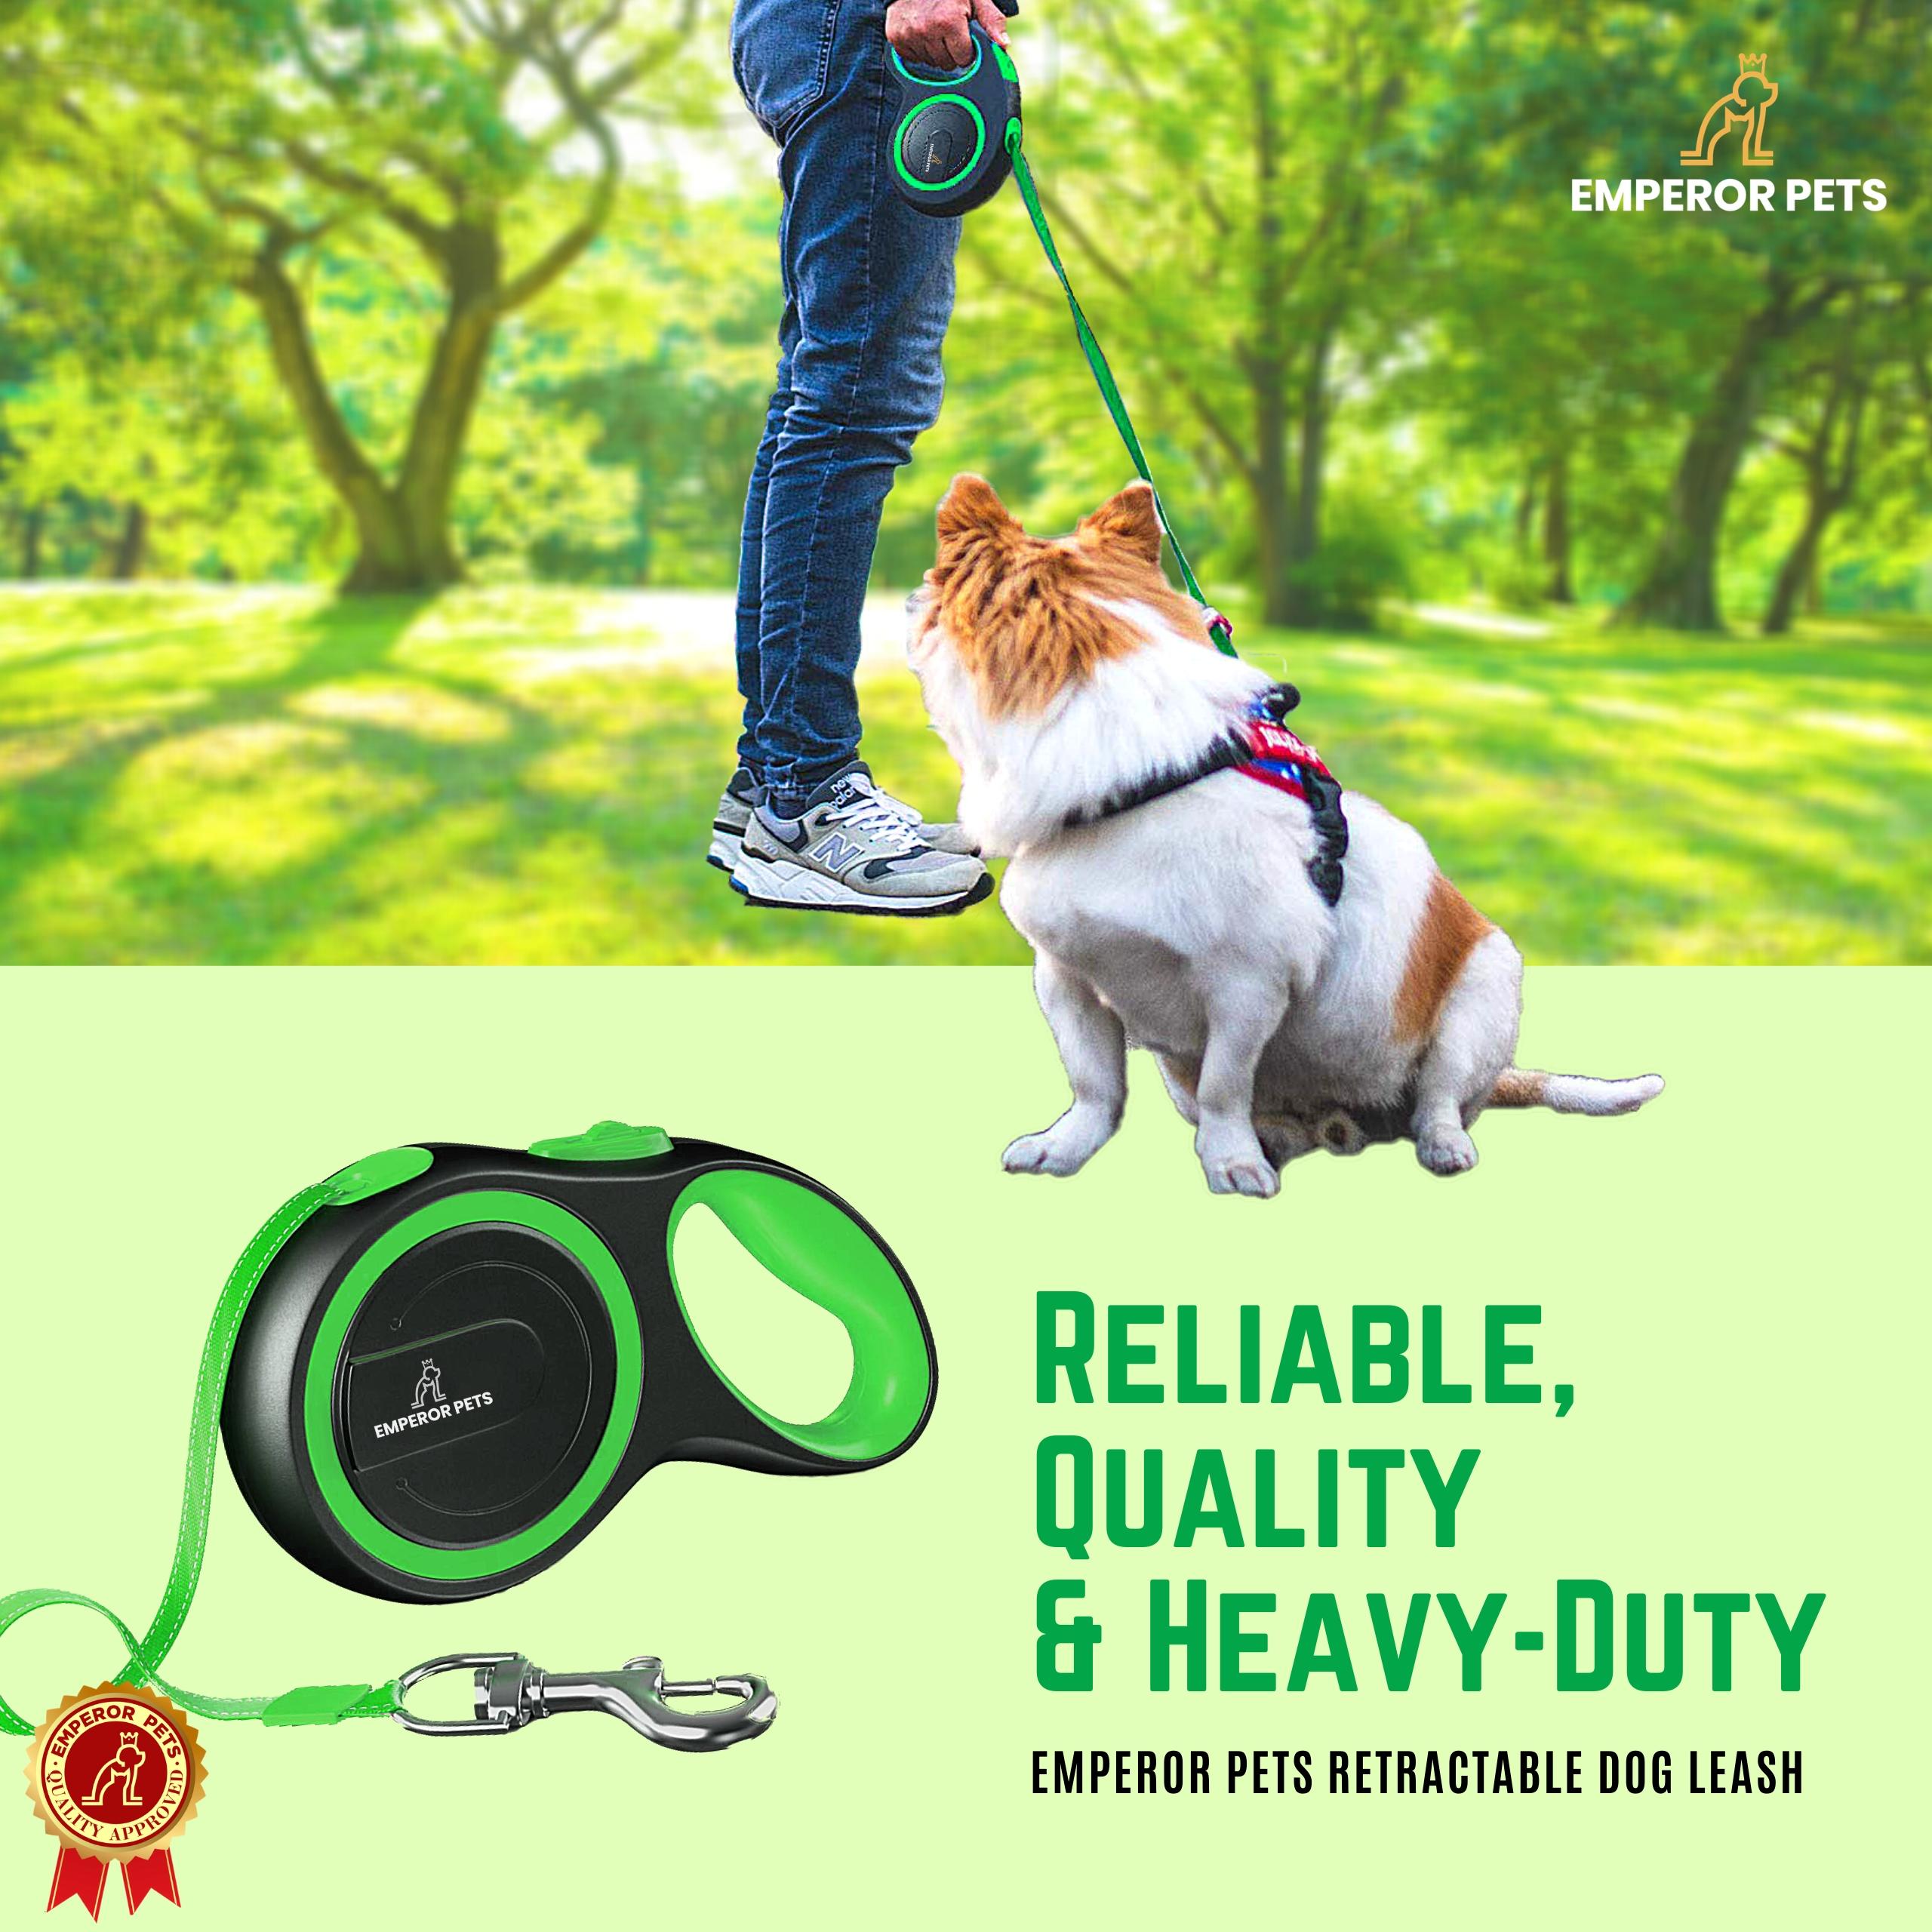 Emperor Pets Retractable Pet Leash Tape Length 16ft 5m Green Color, Durable Retractable Dog Leash - Image 8 Photography